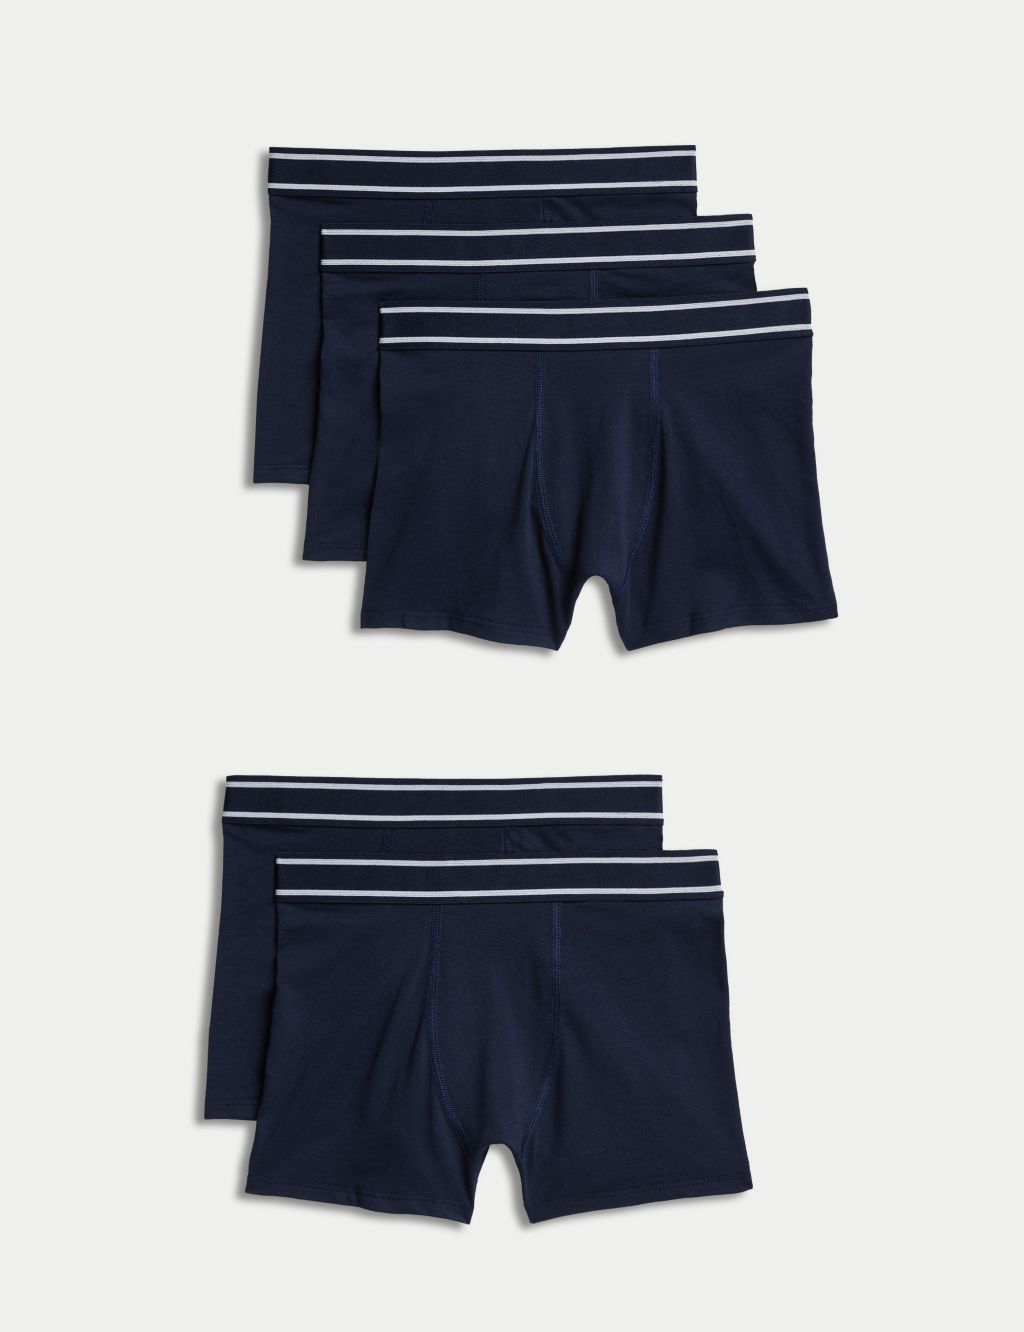 Harry Bear Boys Dinosaur Underwear 5 Pack | Sizes 2T-8